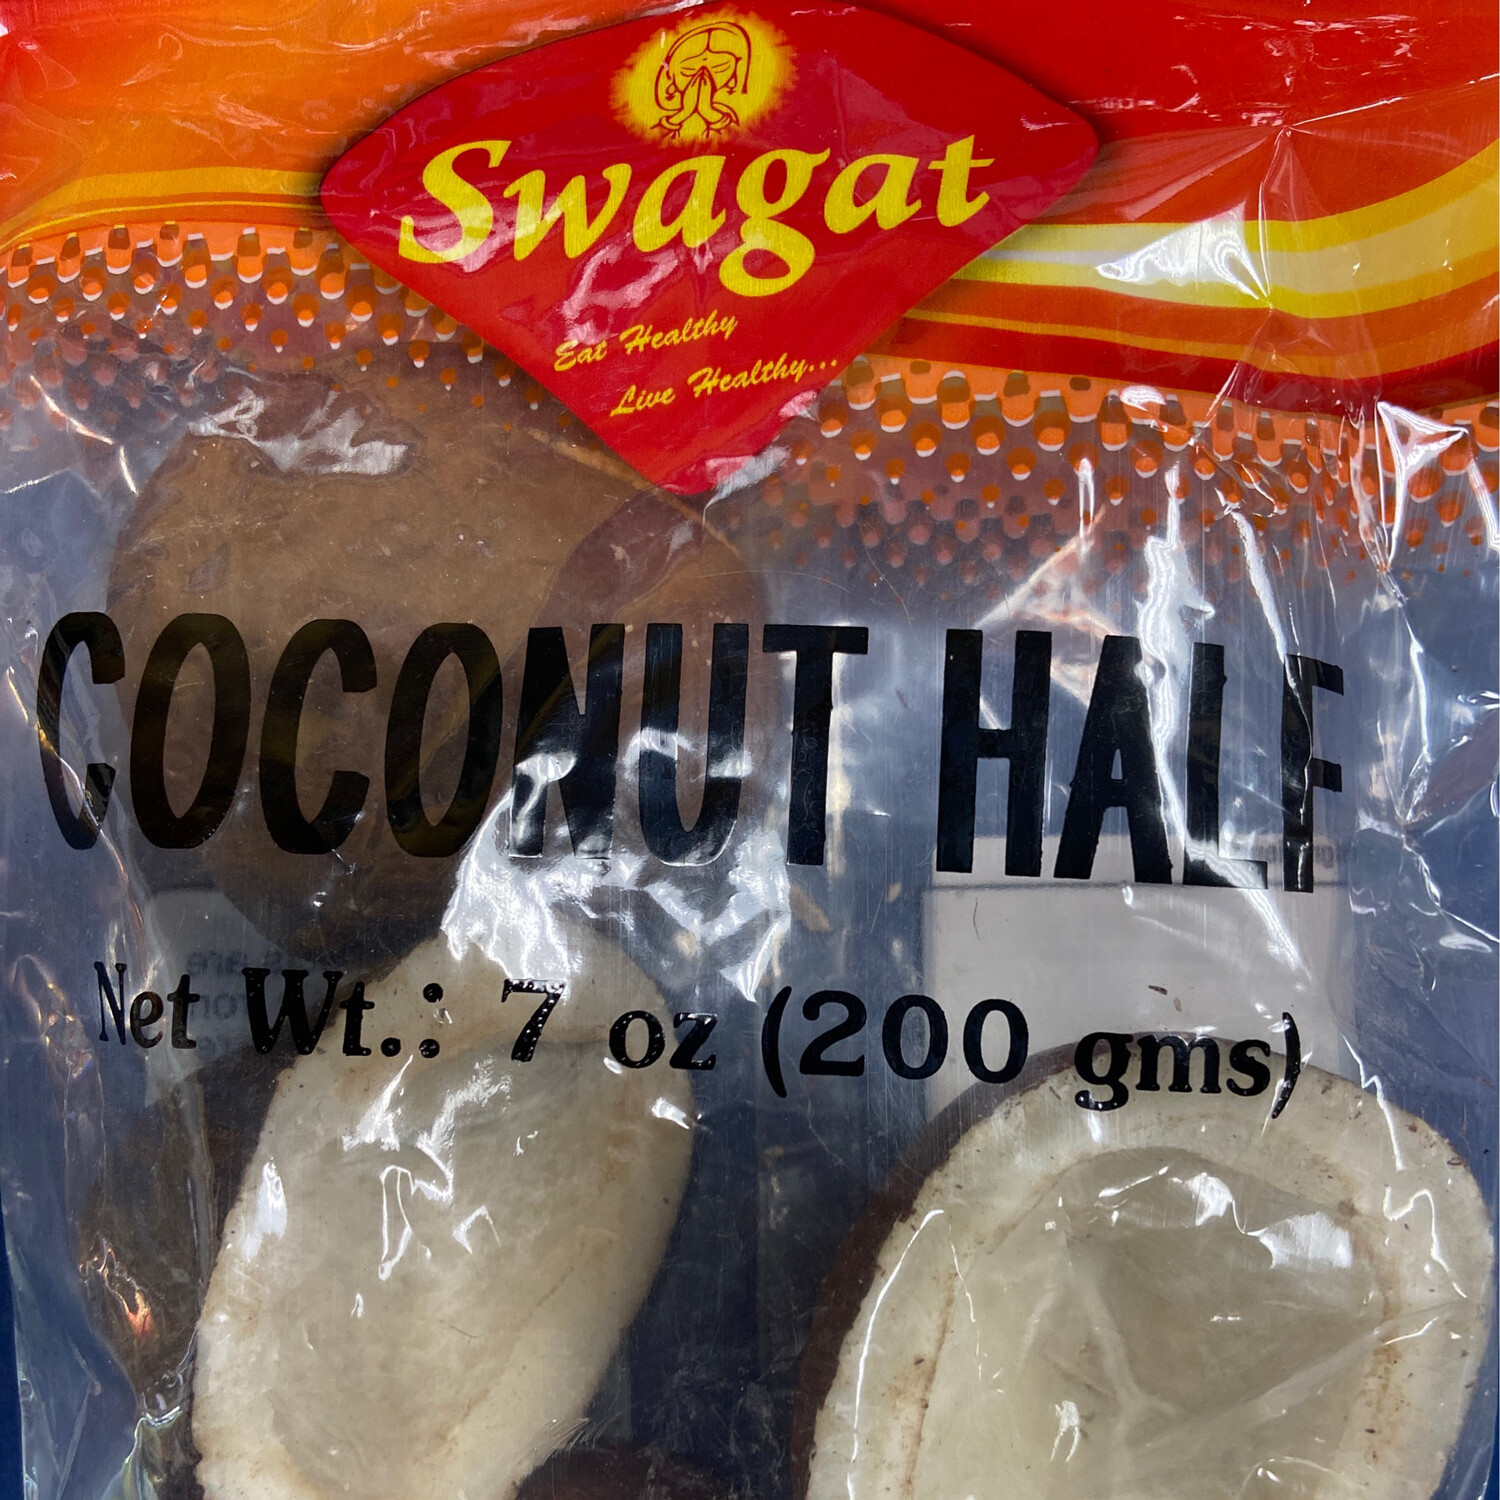 Swagat Coconut Half 200g